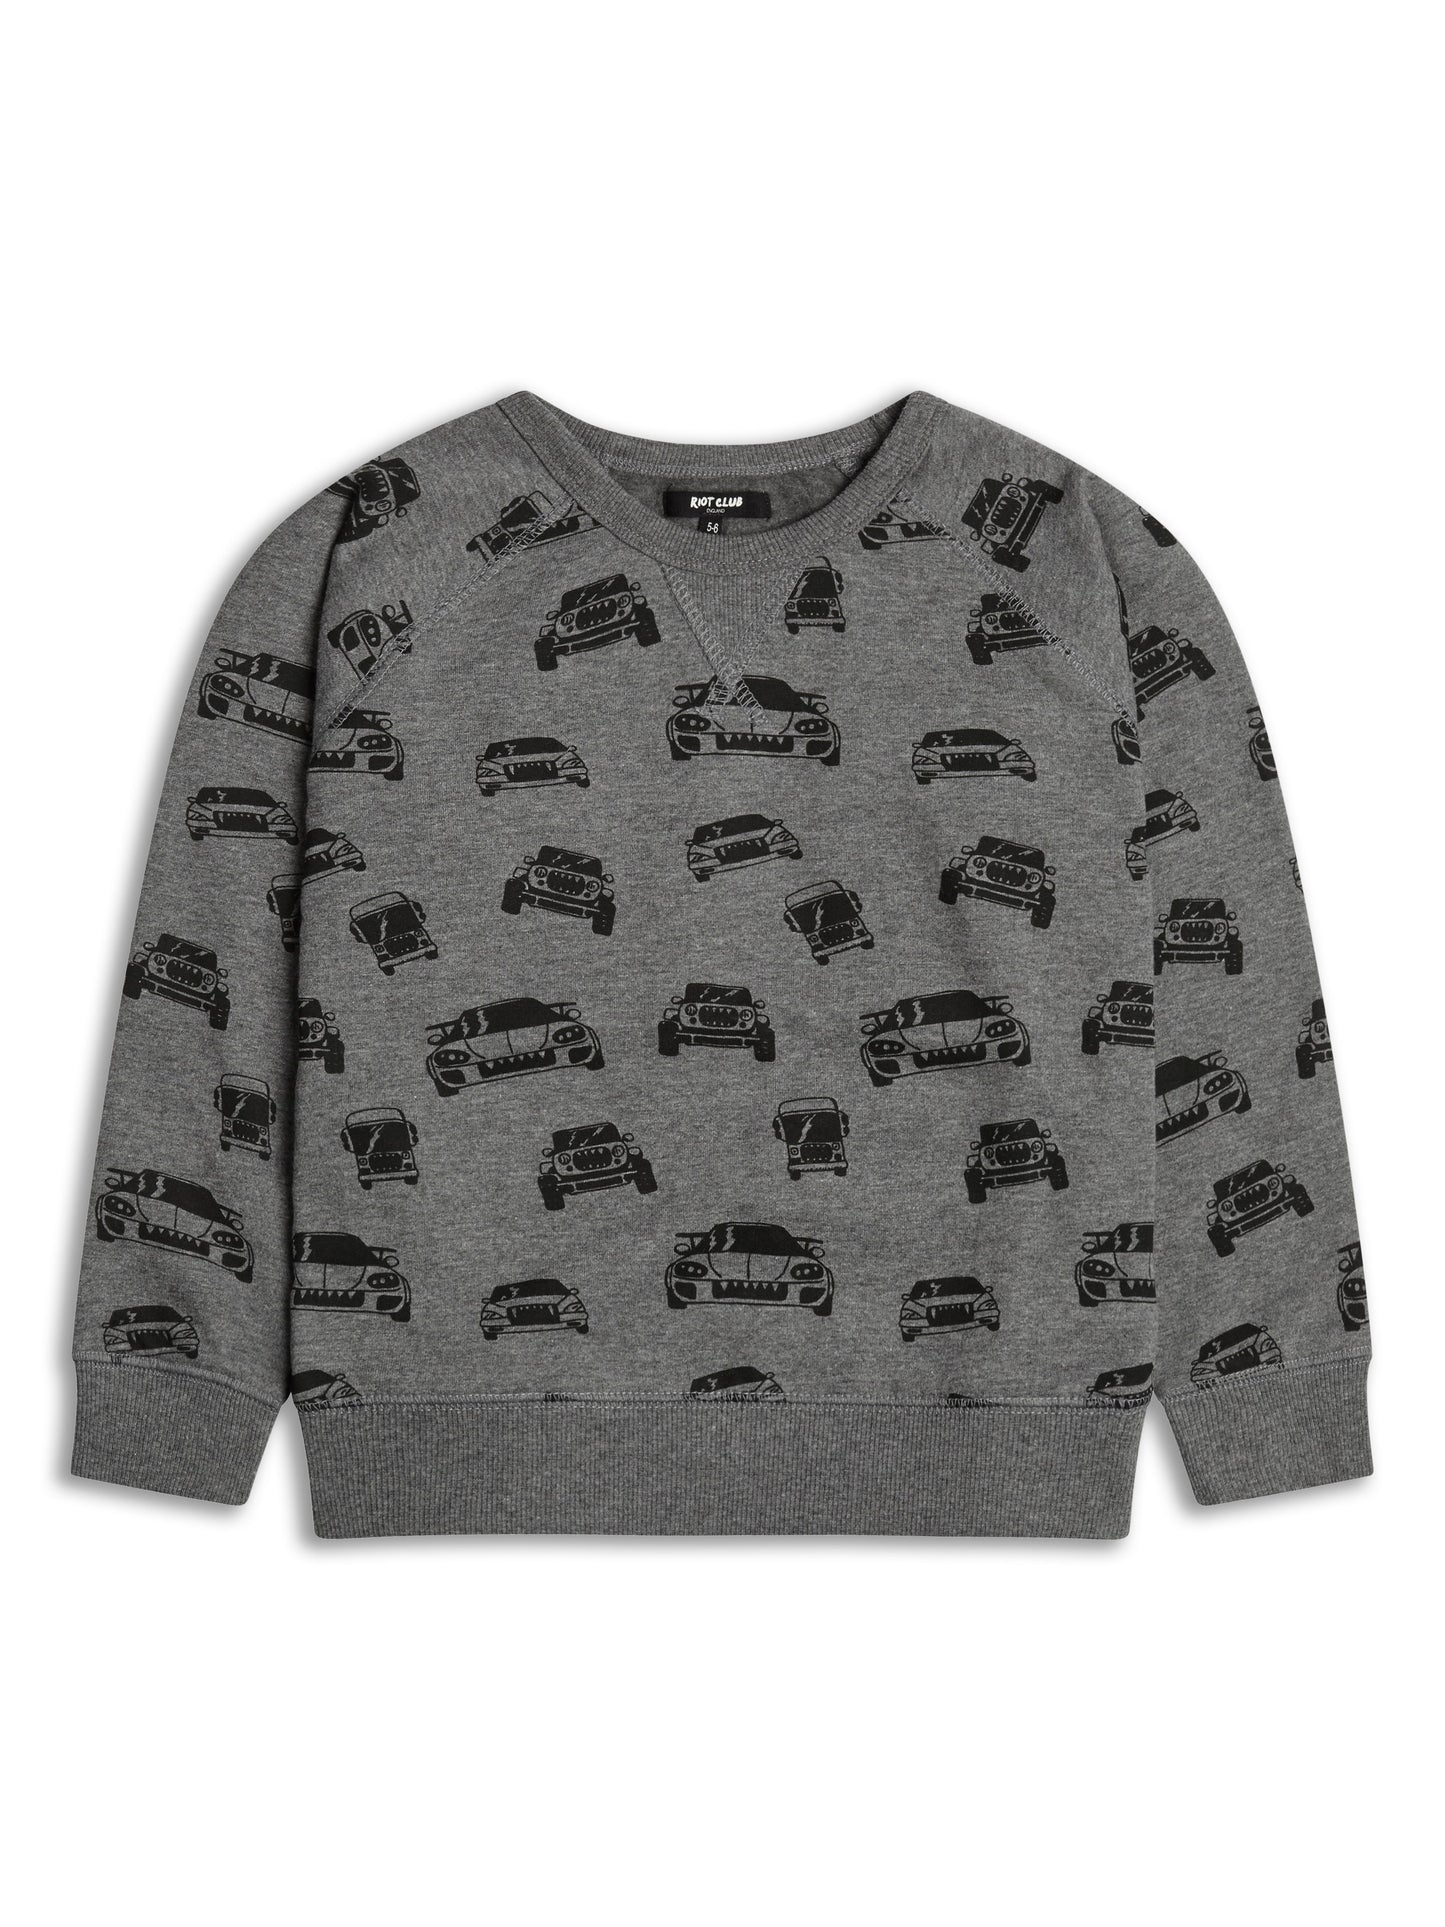 Boys Race Car Sweater